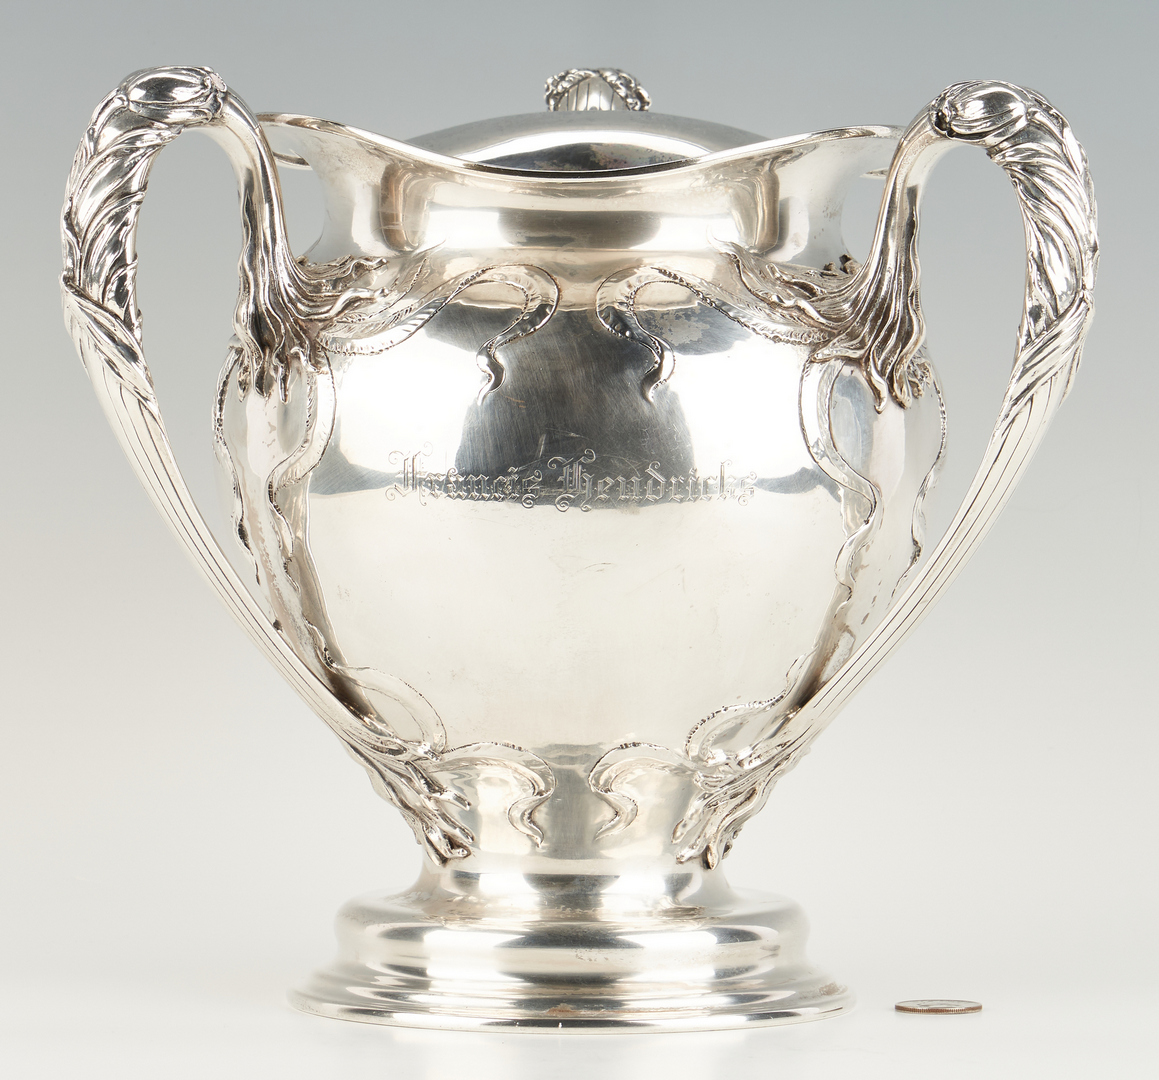 Lot 76: Large Art Nouveau Sterling Loving Cup, Dominick & Haff